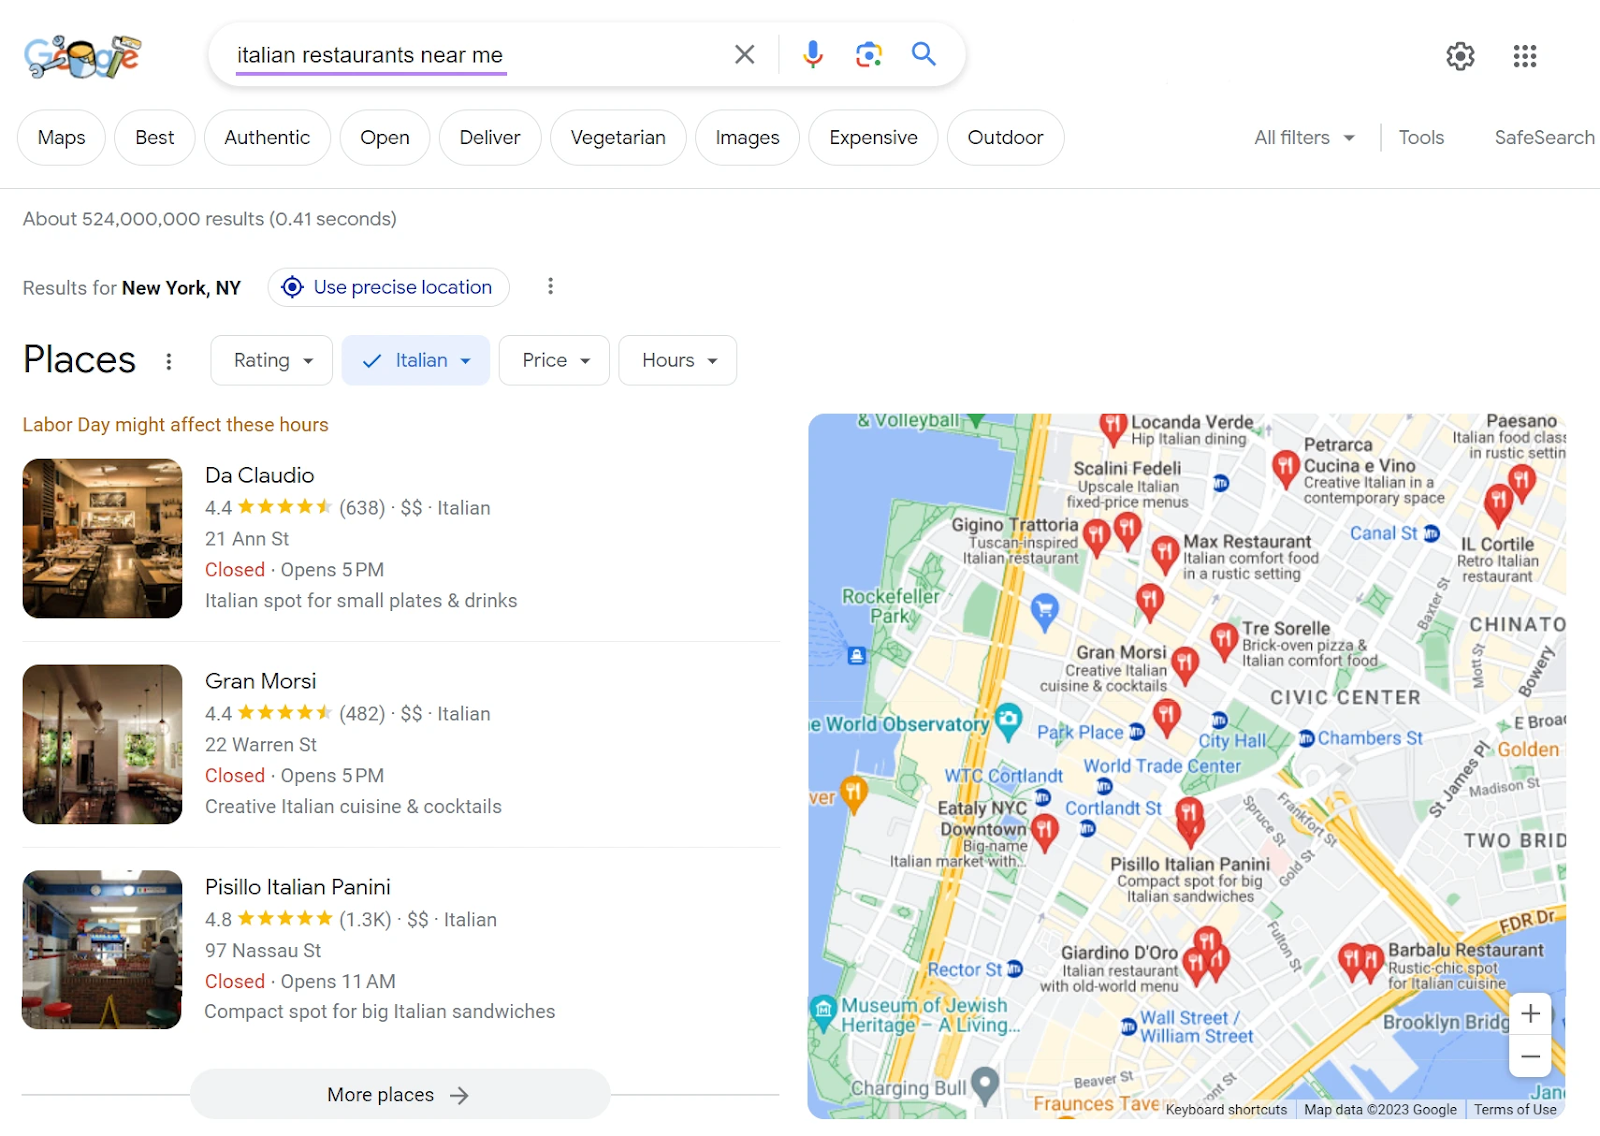 “Italian restaurants near me” query in Google